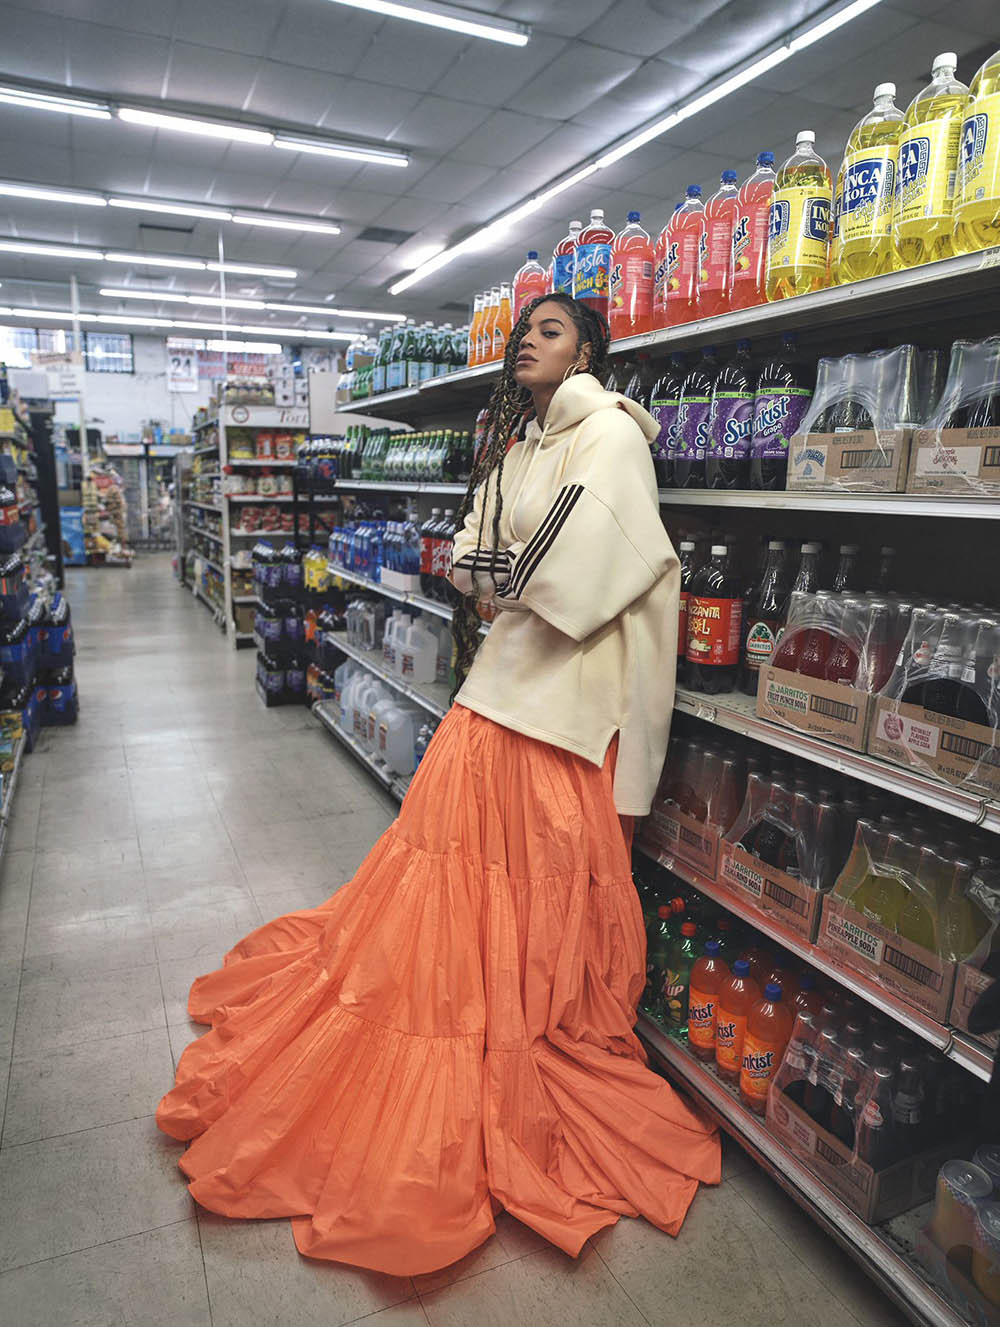 Beyoncé covers Elle US January 2020 by Melina Matsoukas